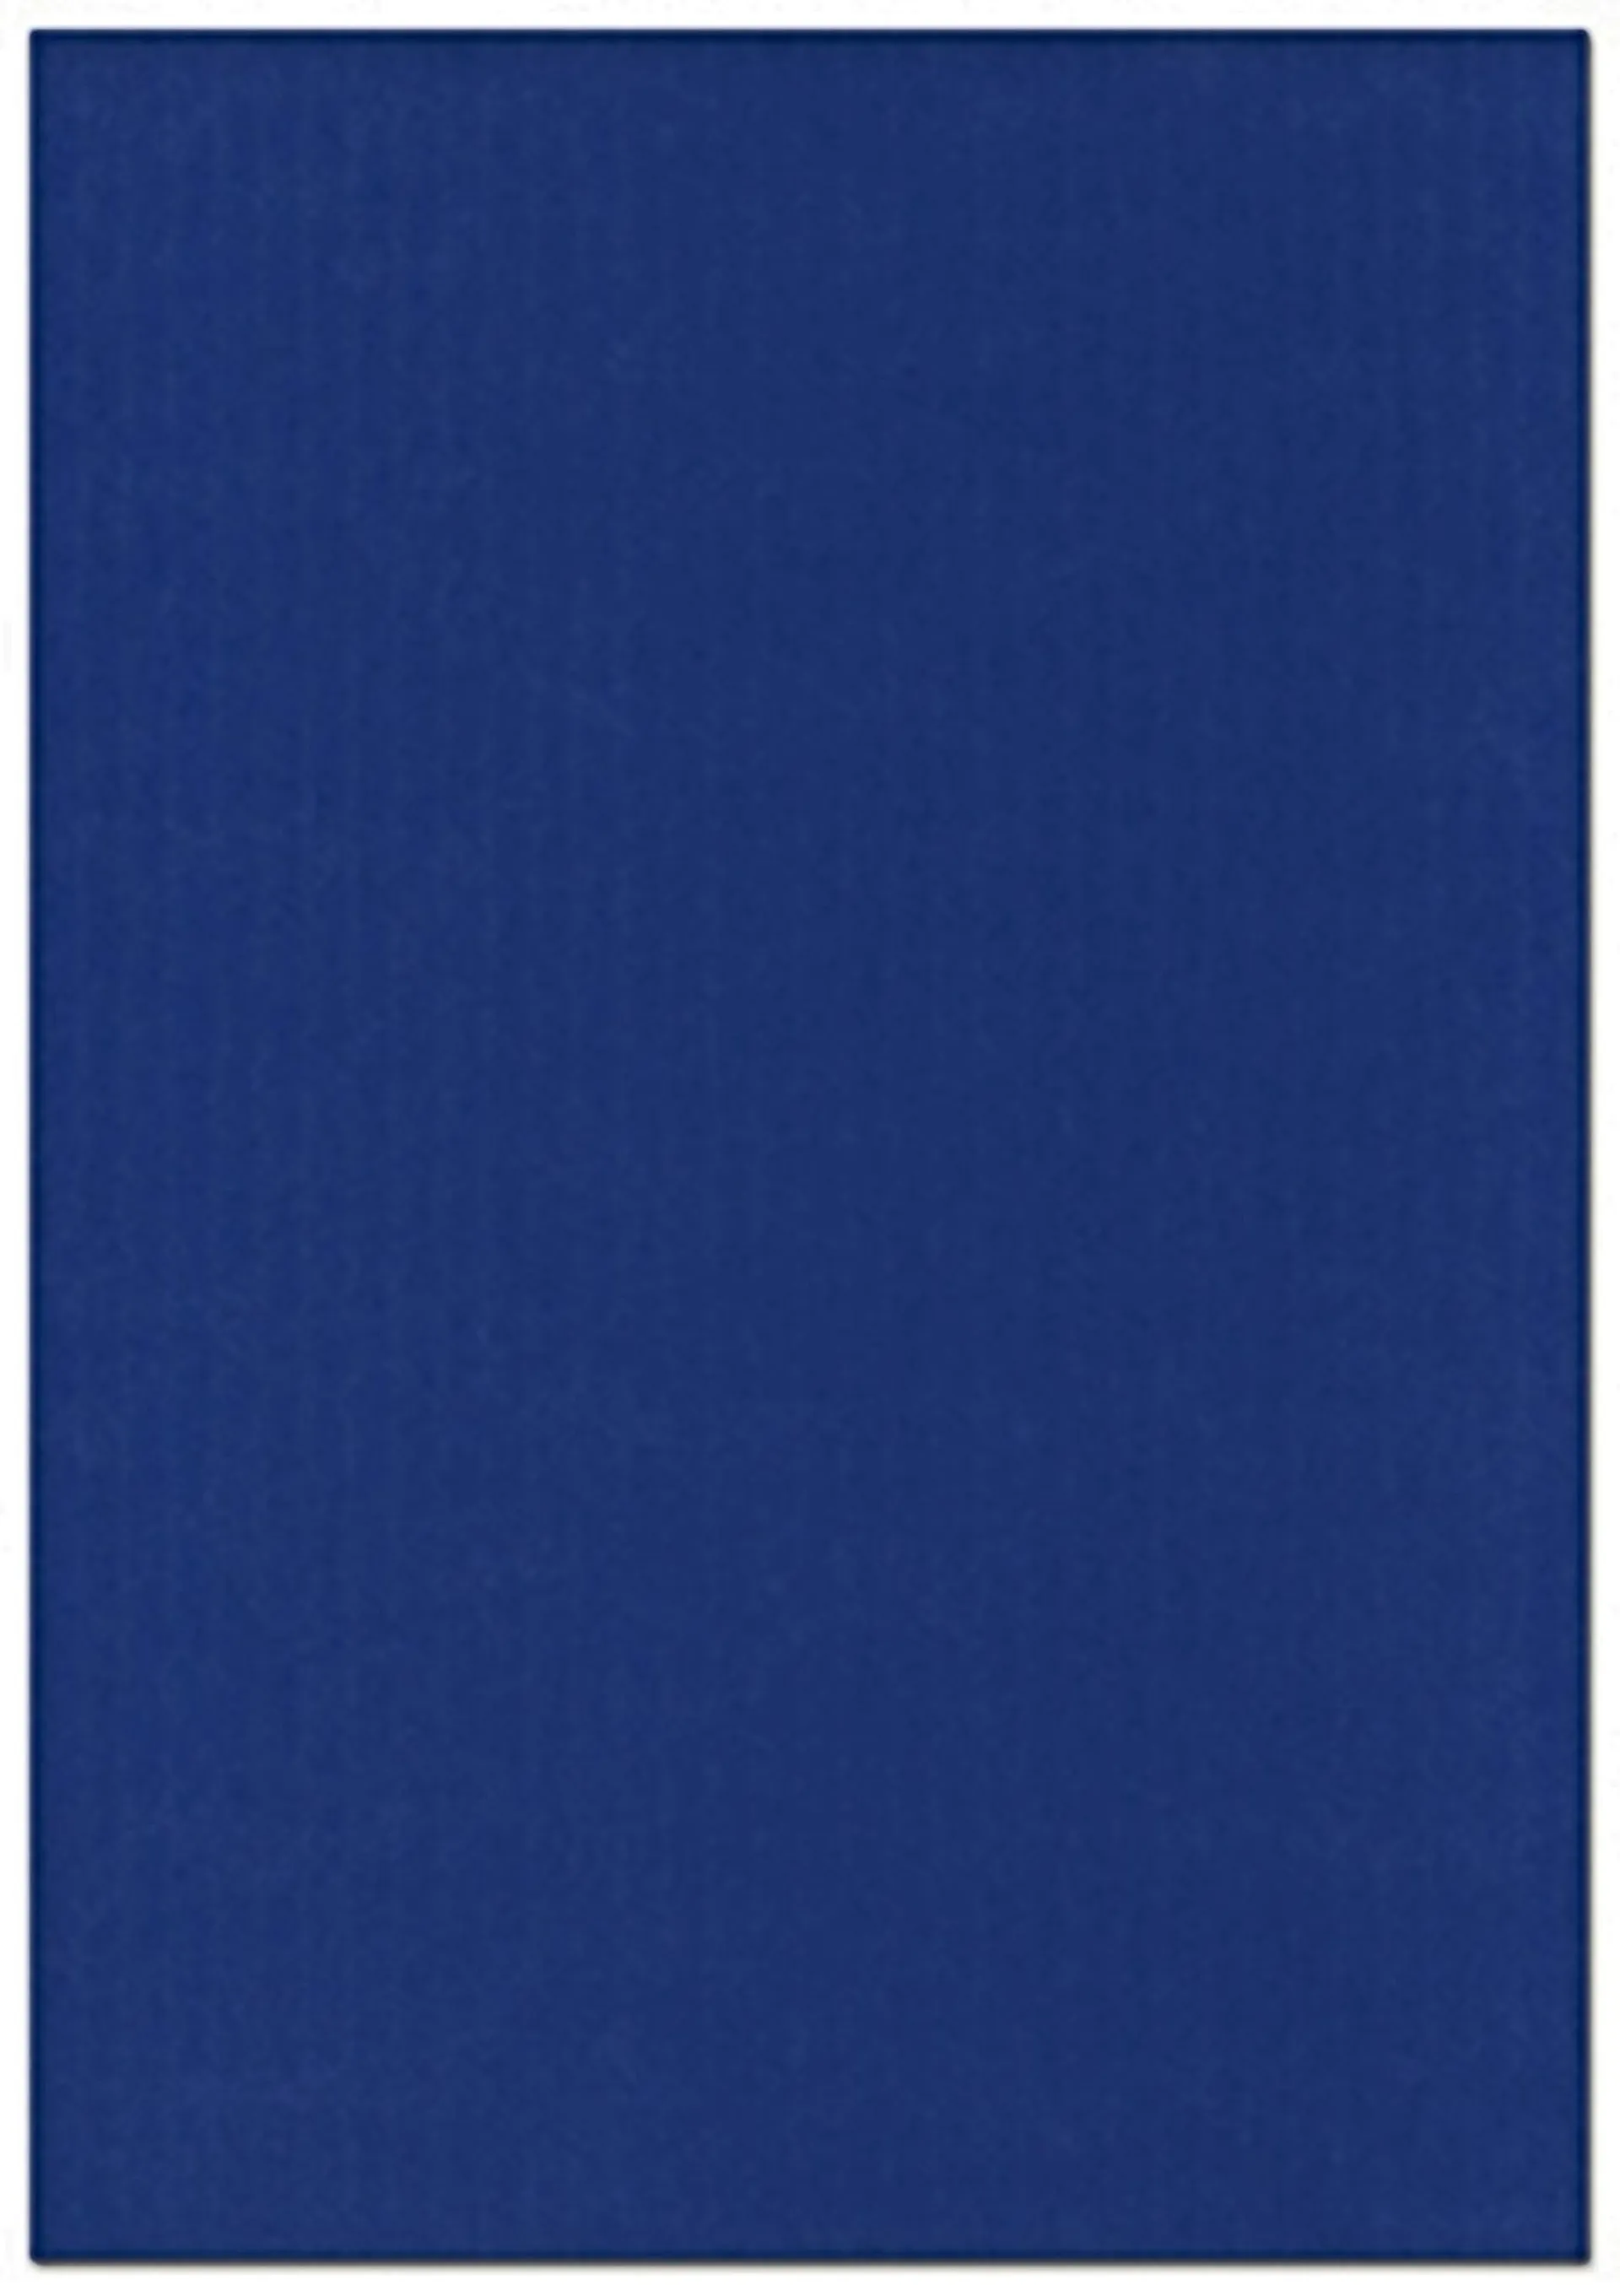 Karto kartonki sininen 50x70cm 220gsm 5ark/pss